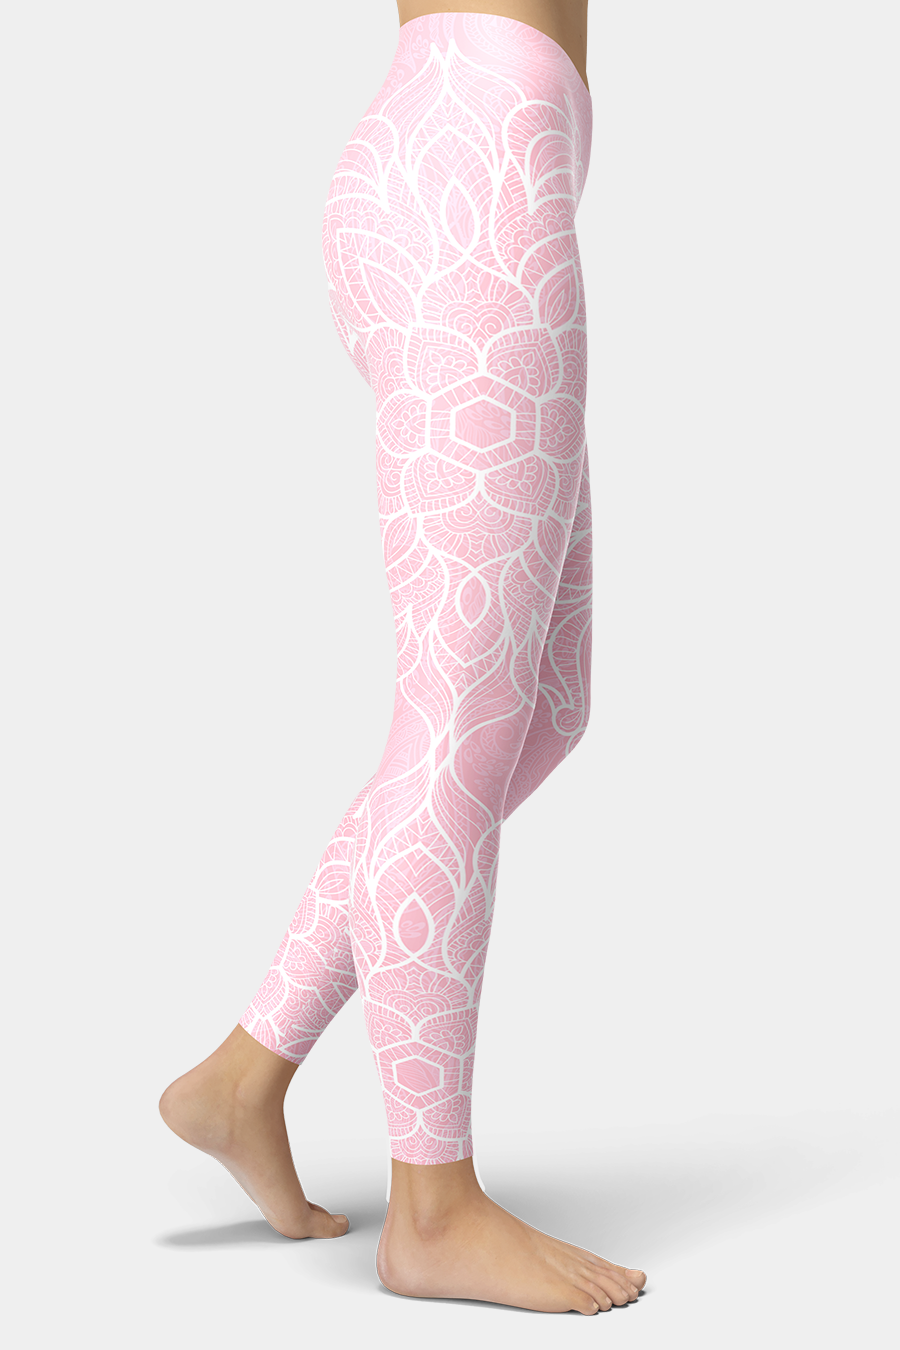 Soft Pink Mandala Leggings - SeeMyLeggings